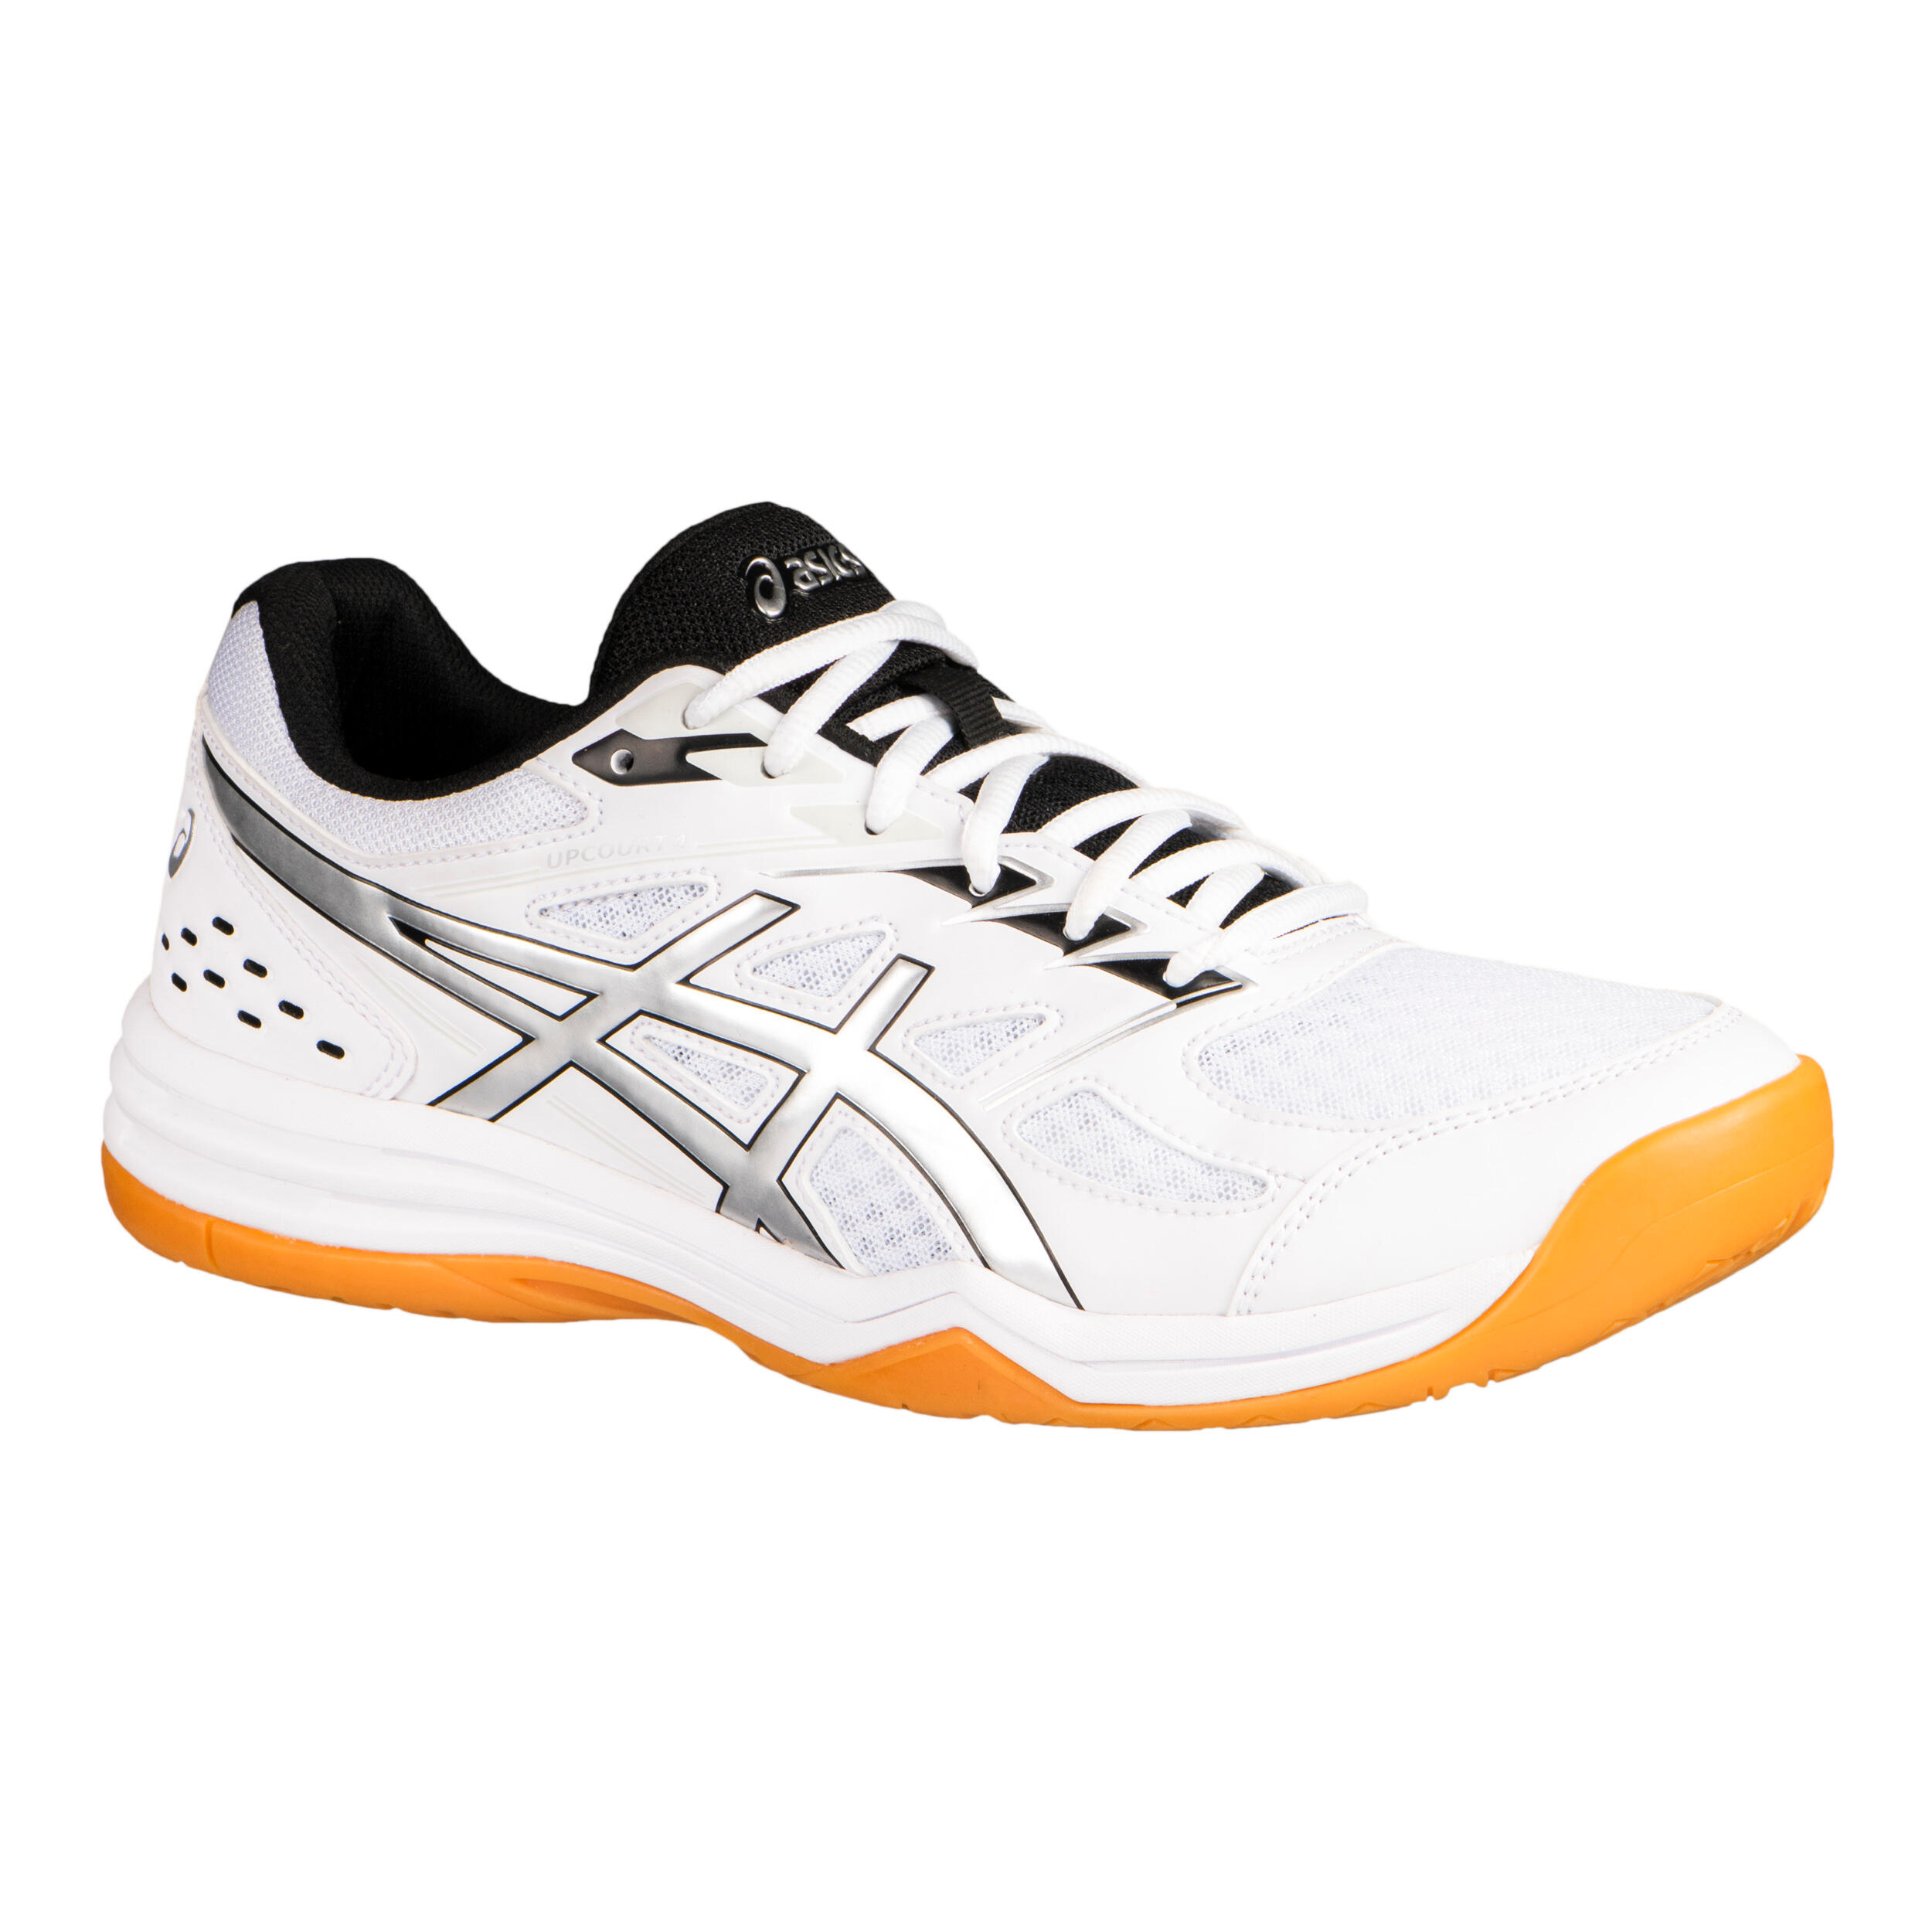 Men's Badminton / Squash / Indoor Sports Shoe Upcourt 4 - White/silver